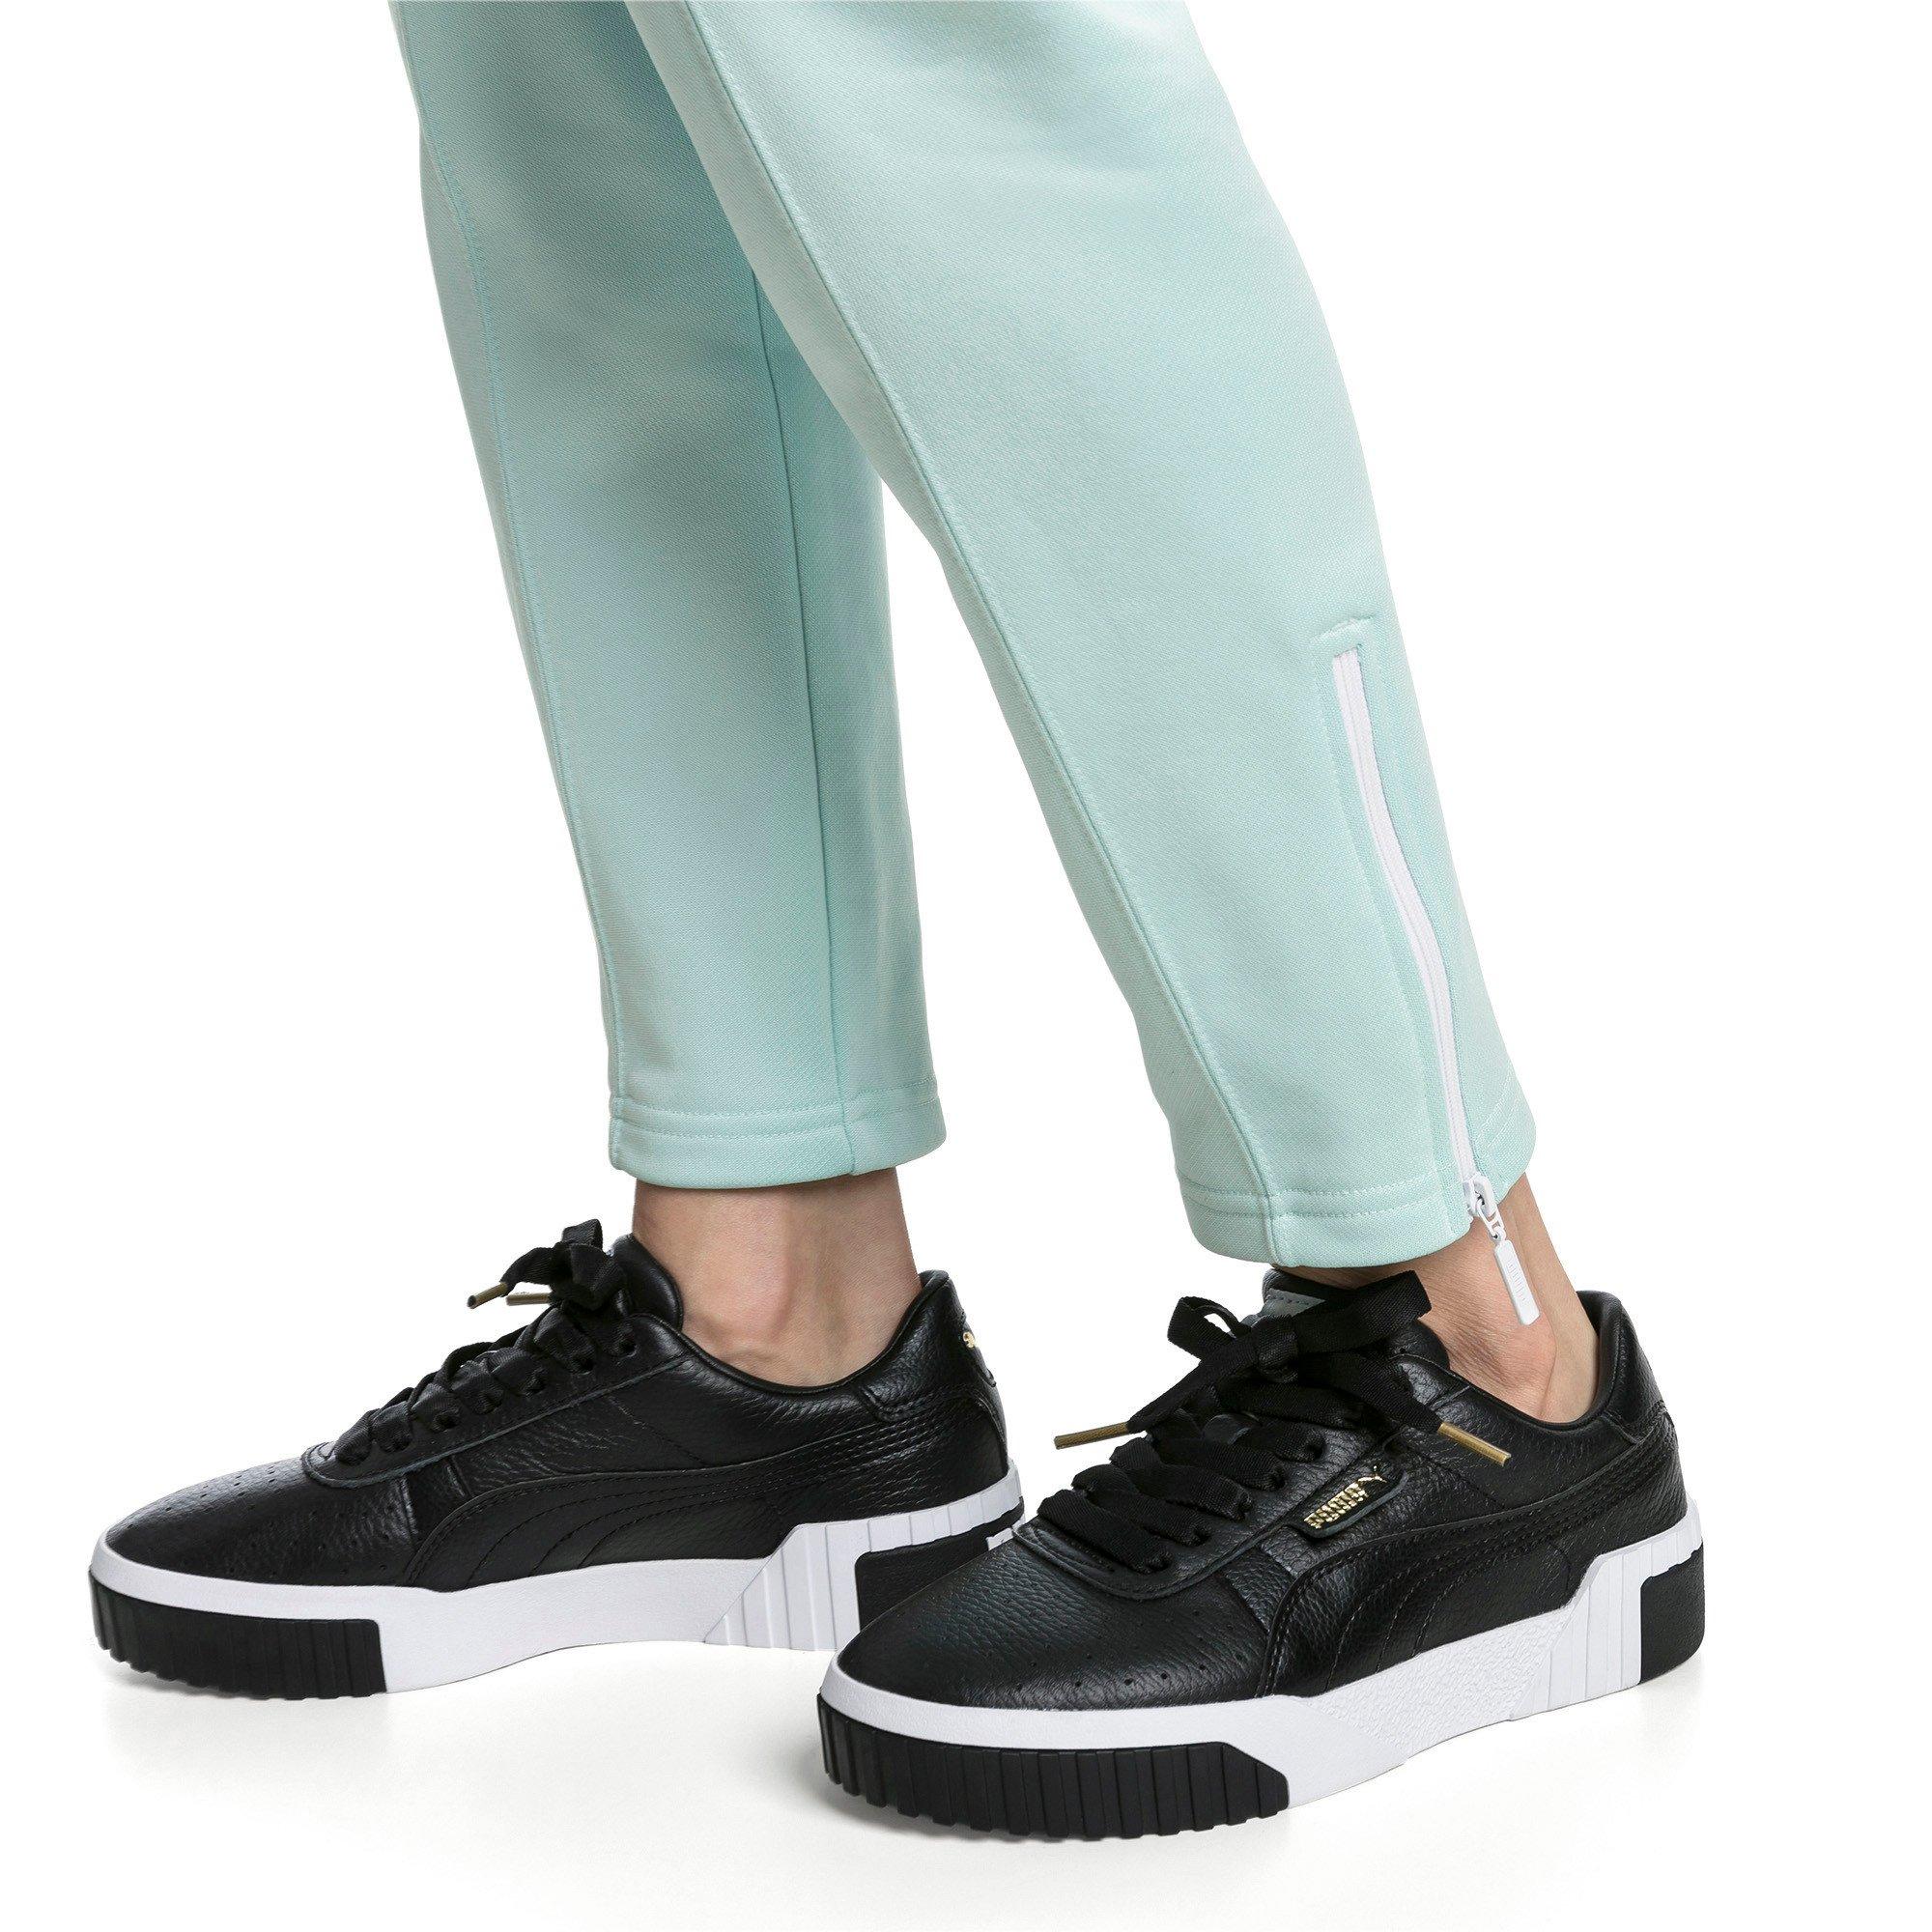 puma cali white and black sneakers